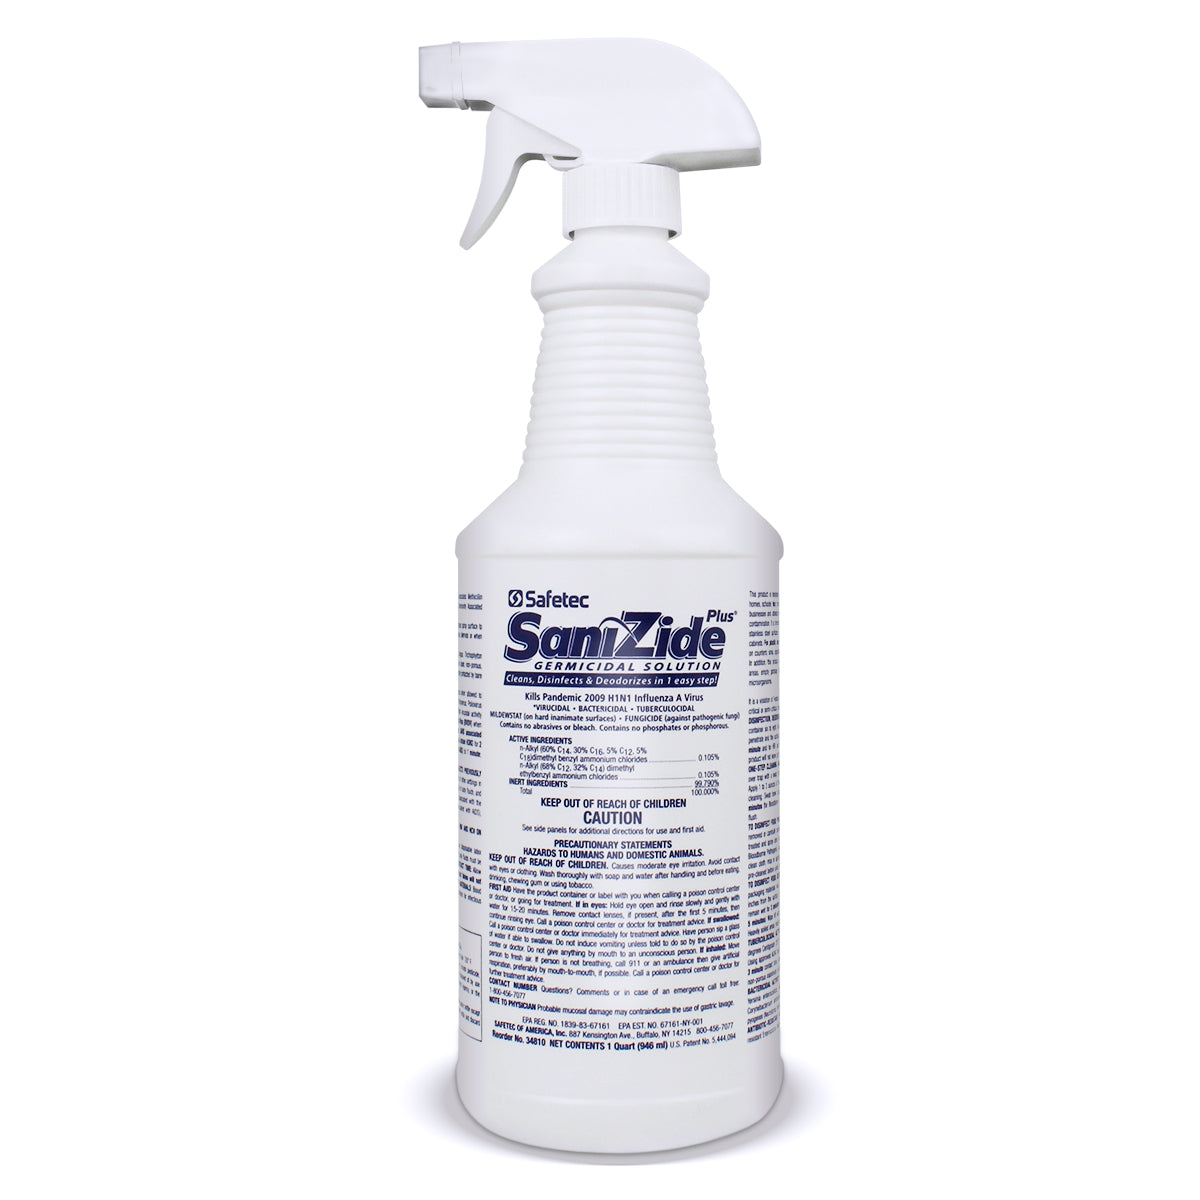 SOMANY Nexol250 Nexol Disinfectant Faucet Cleaner - 250 ml in Kadi at best  price by Somany Ceramics Ltd - Justdial